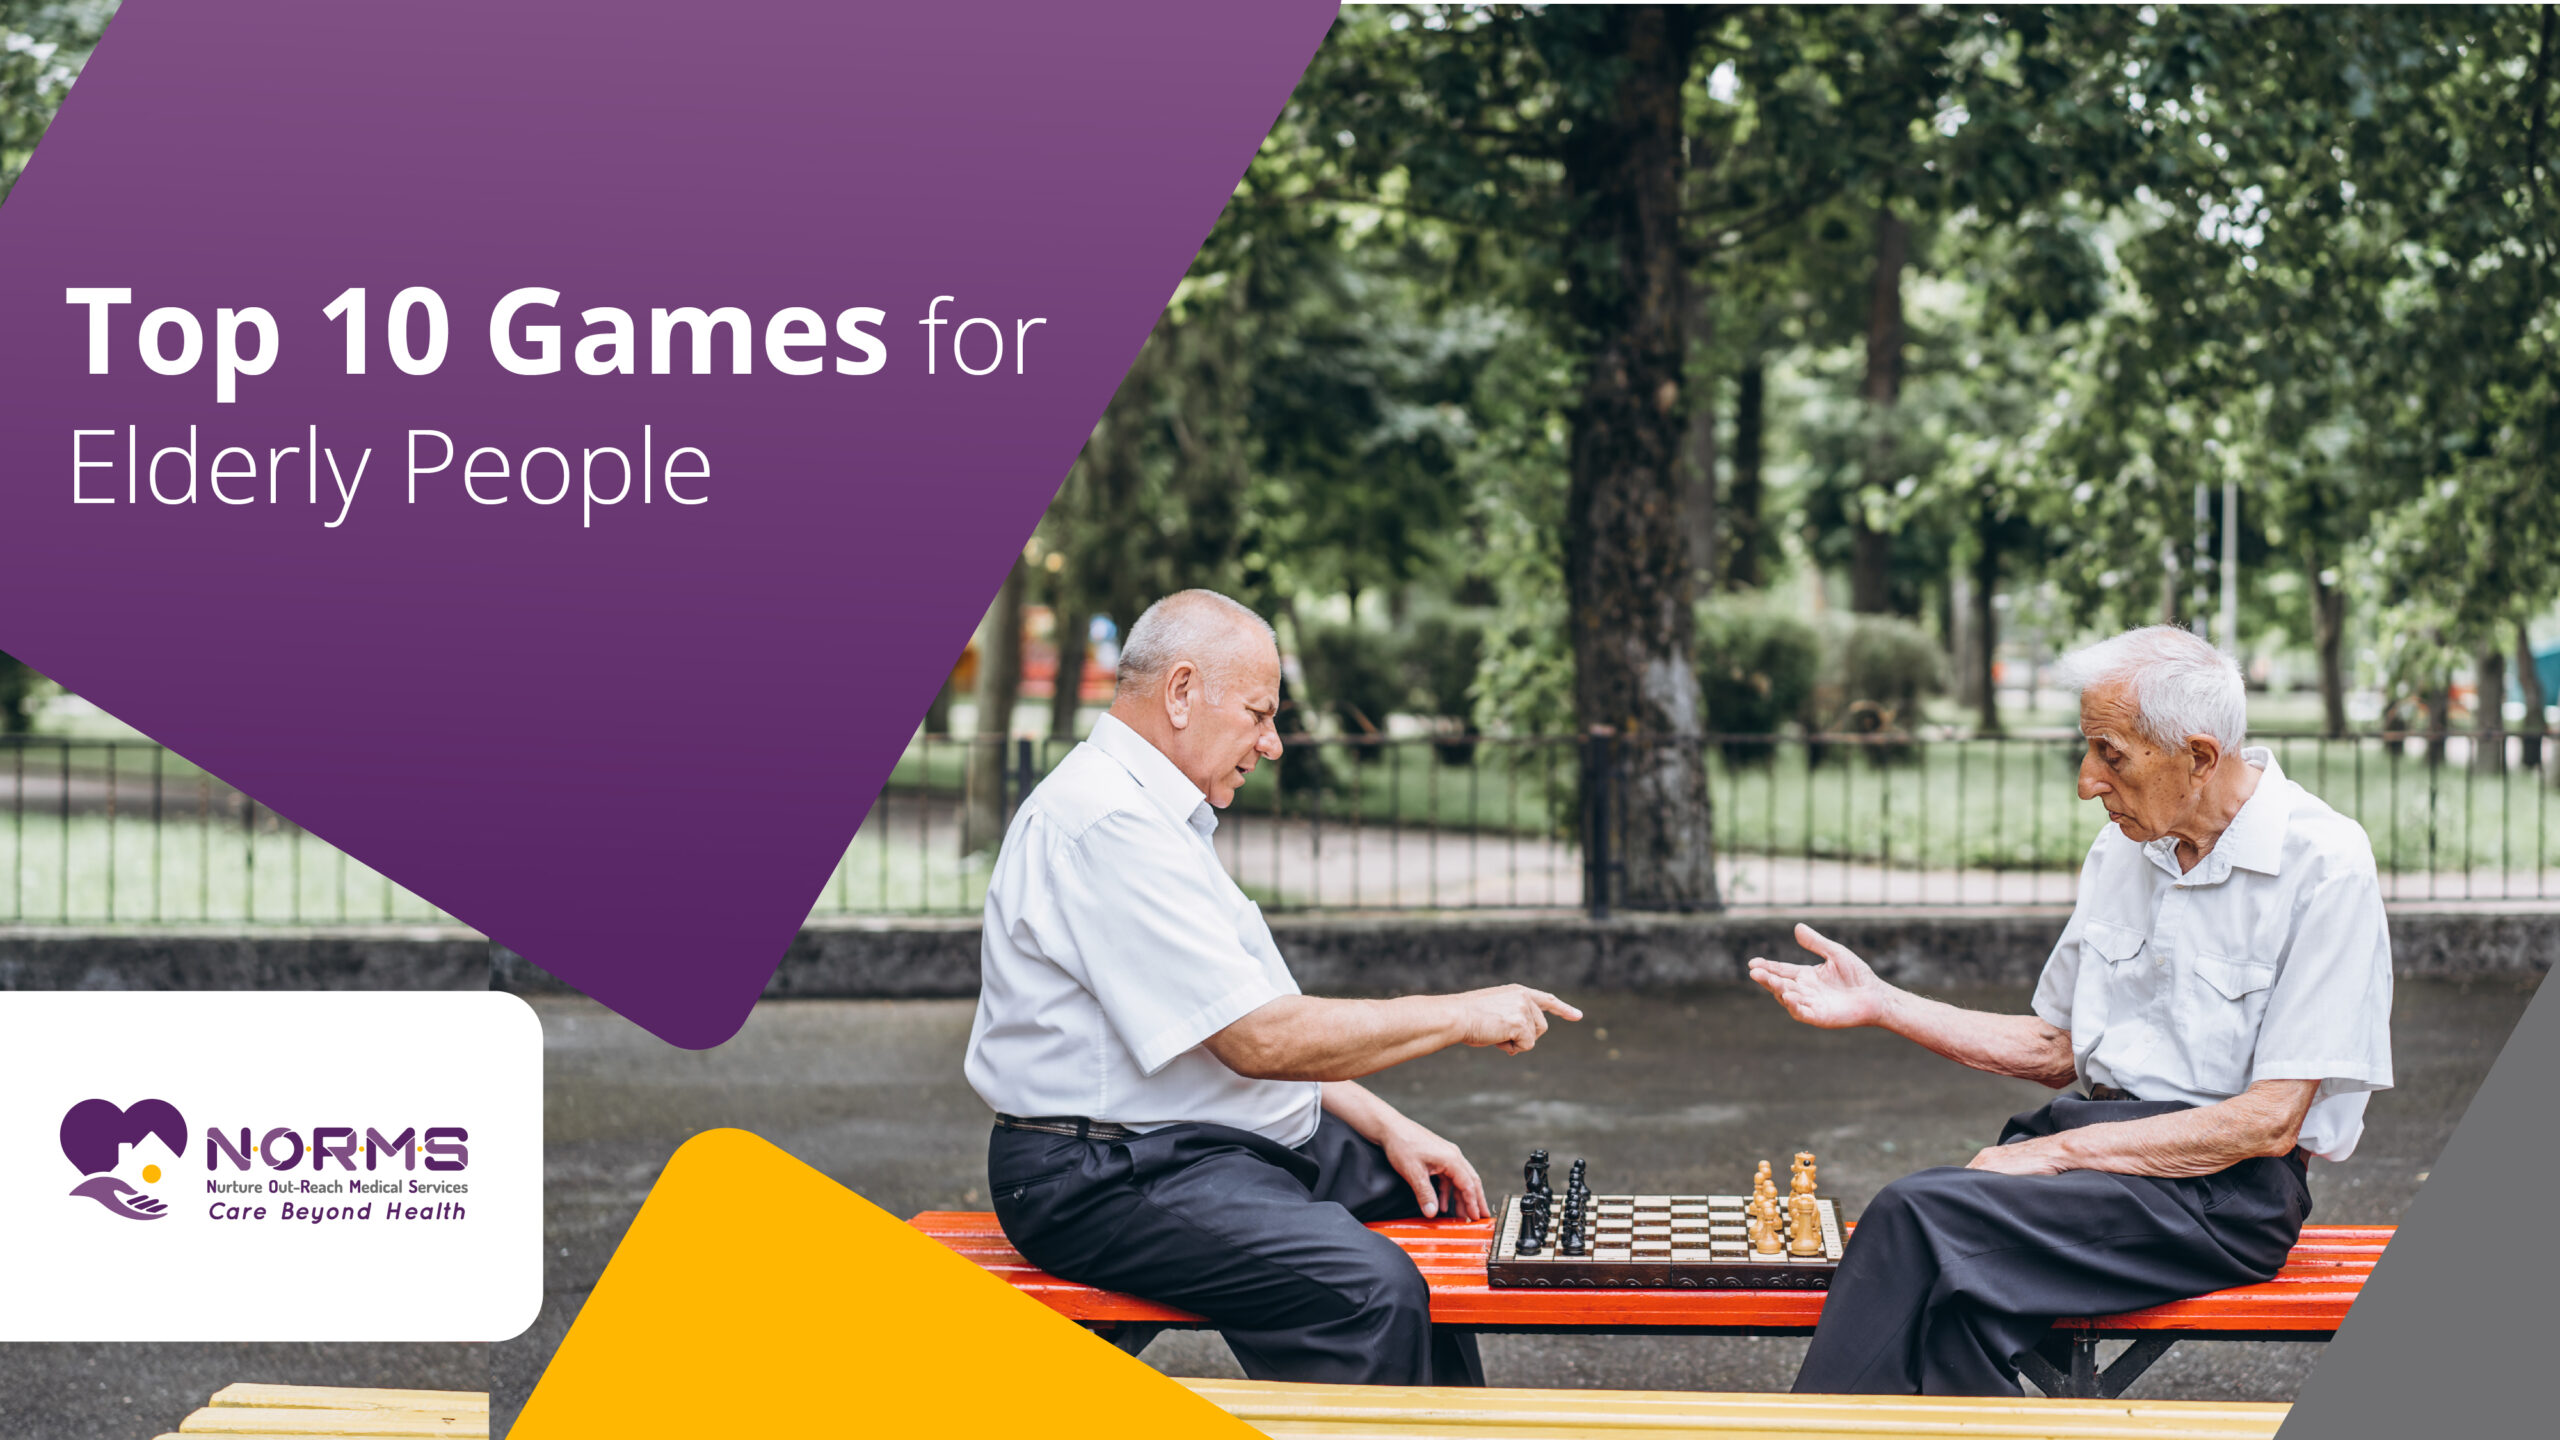 Top 10 Games for Elderly People